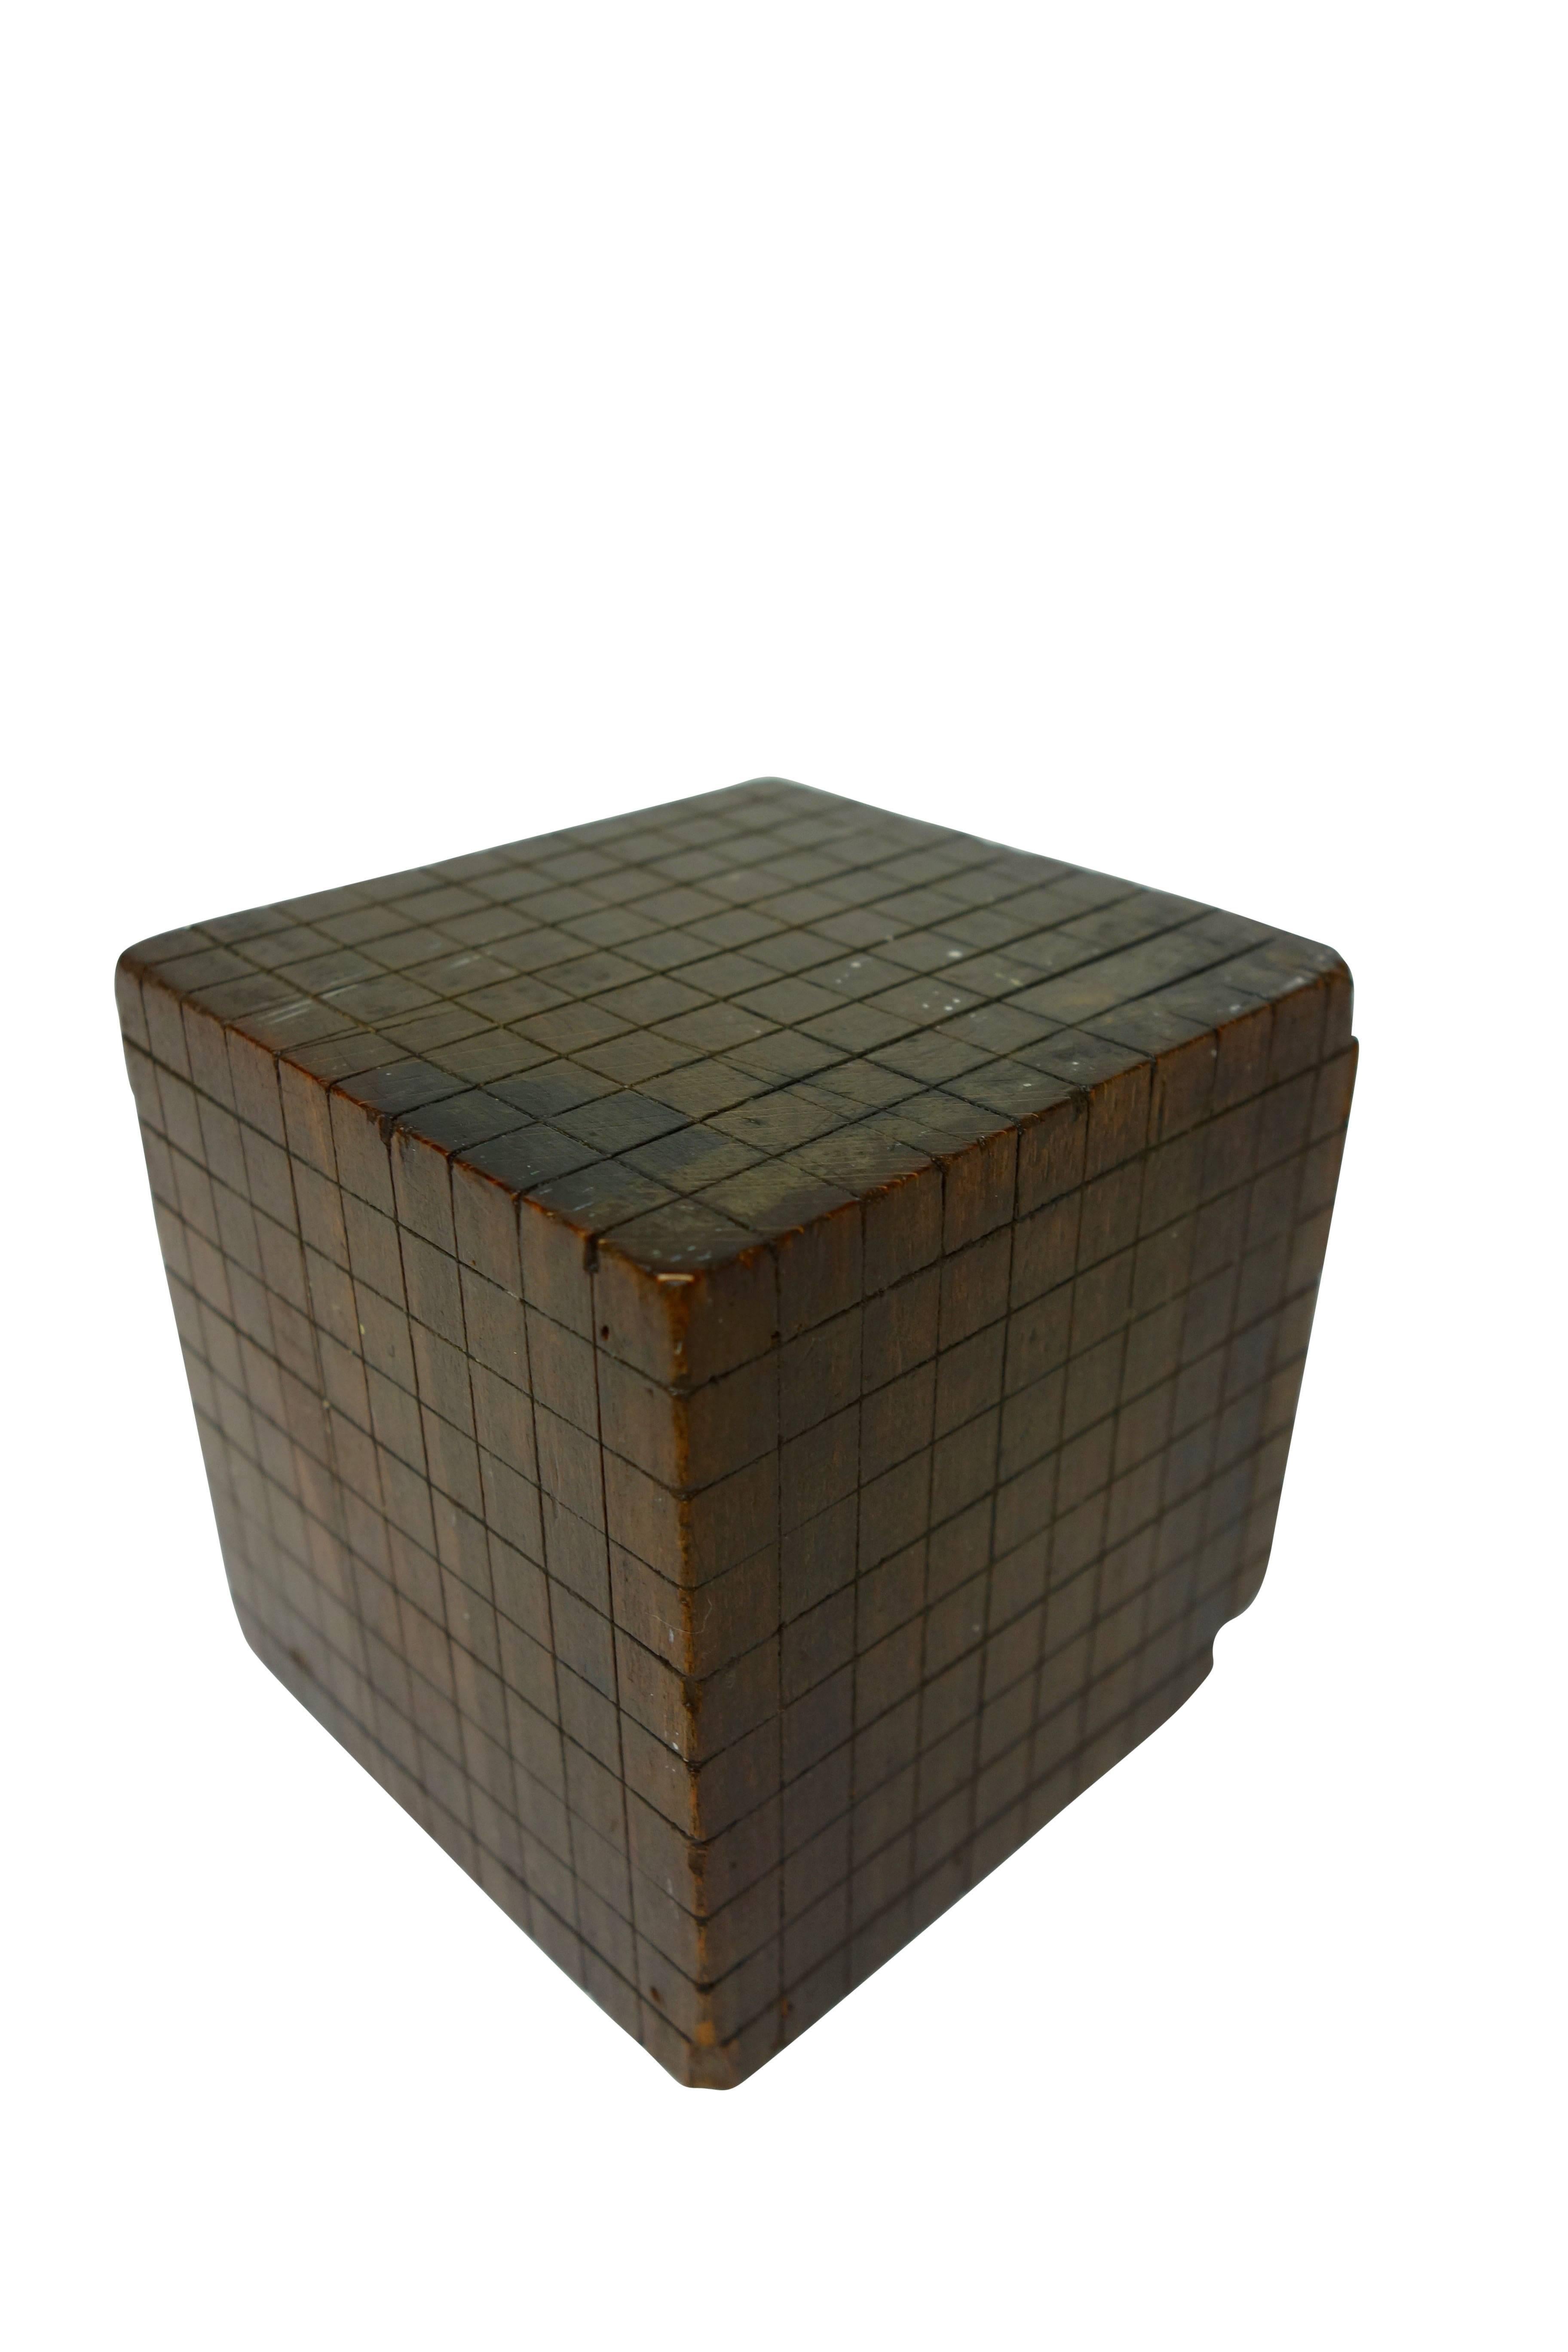 Wood “Base Ten” Cube Educational Model 3